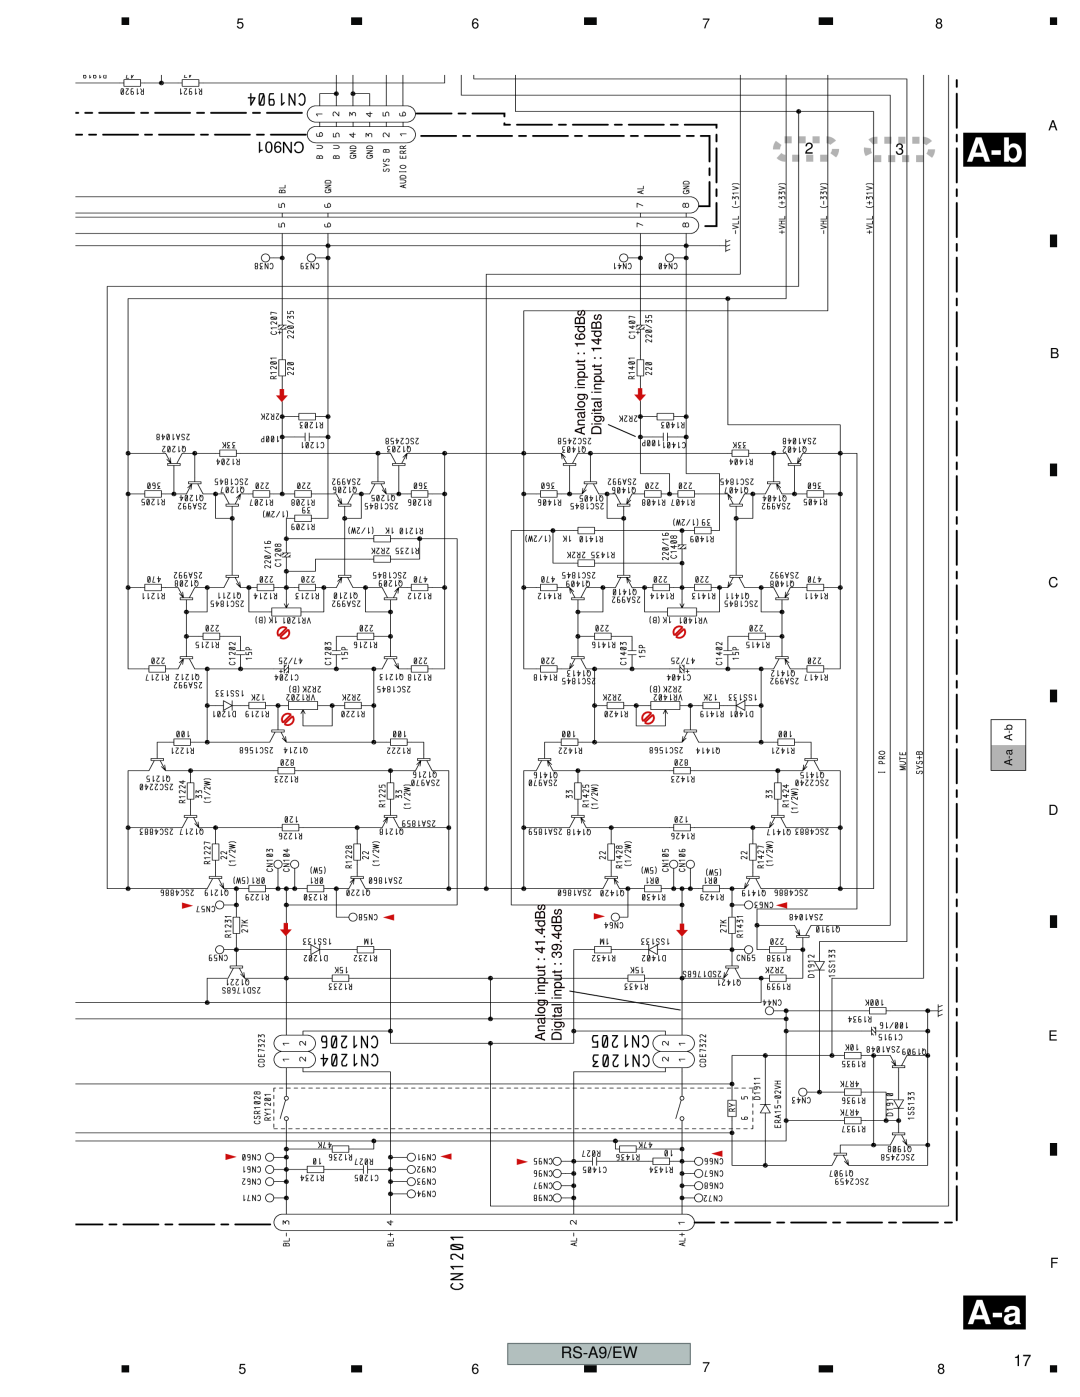 Pioneer RS-A9/EW manual CN901, 16dBs, 14dBs, 41.4dBs, 39.4dBs 